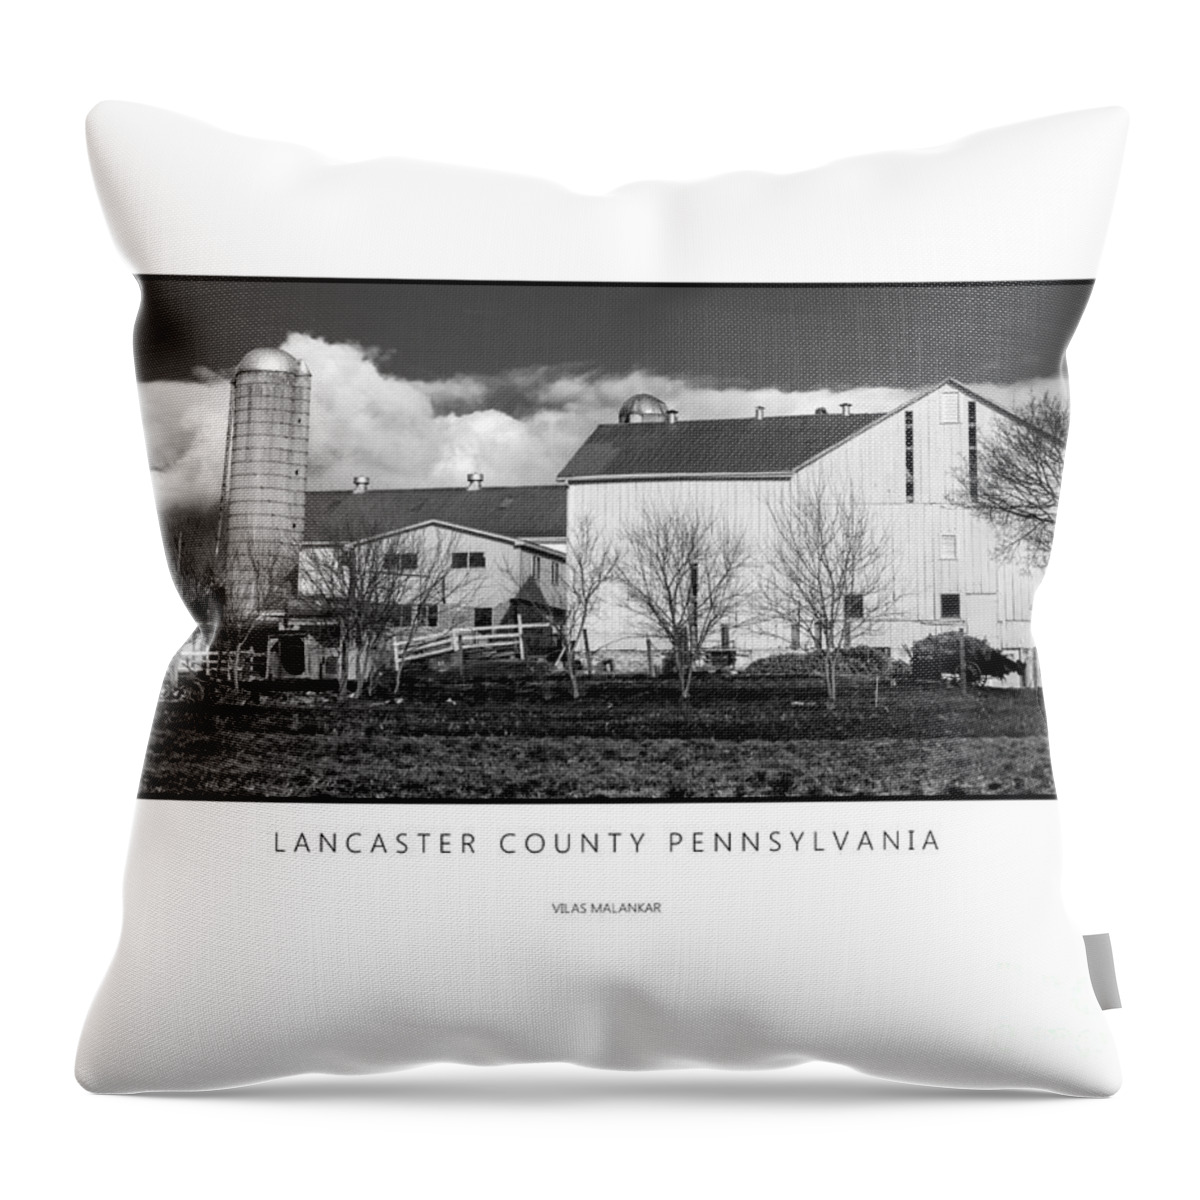 Amish Throw Pillow featuring the photograph Amish Barn by Vilas Malankar